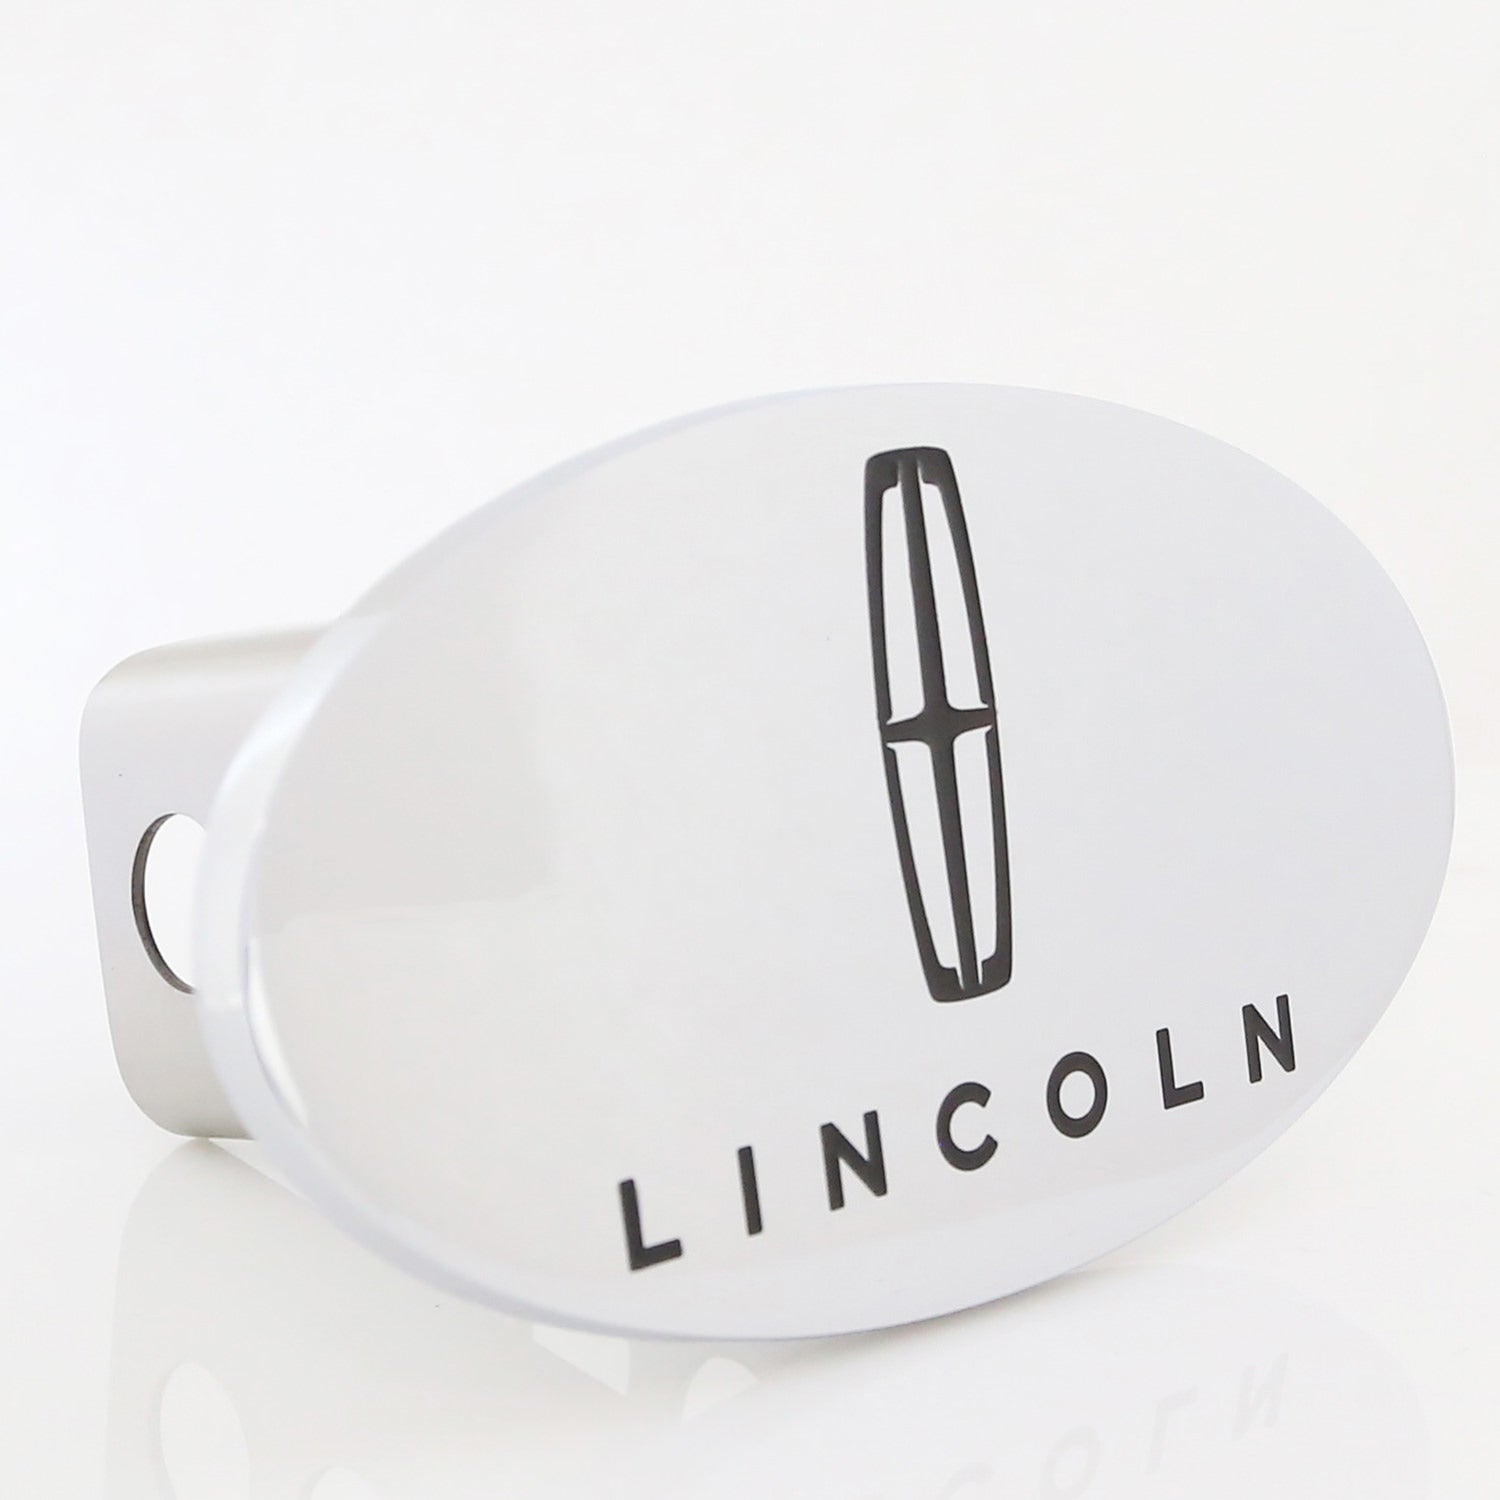 Lincoln Lincoln Hitch Cover